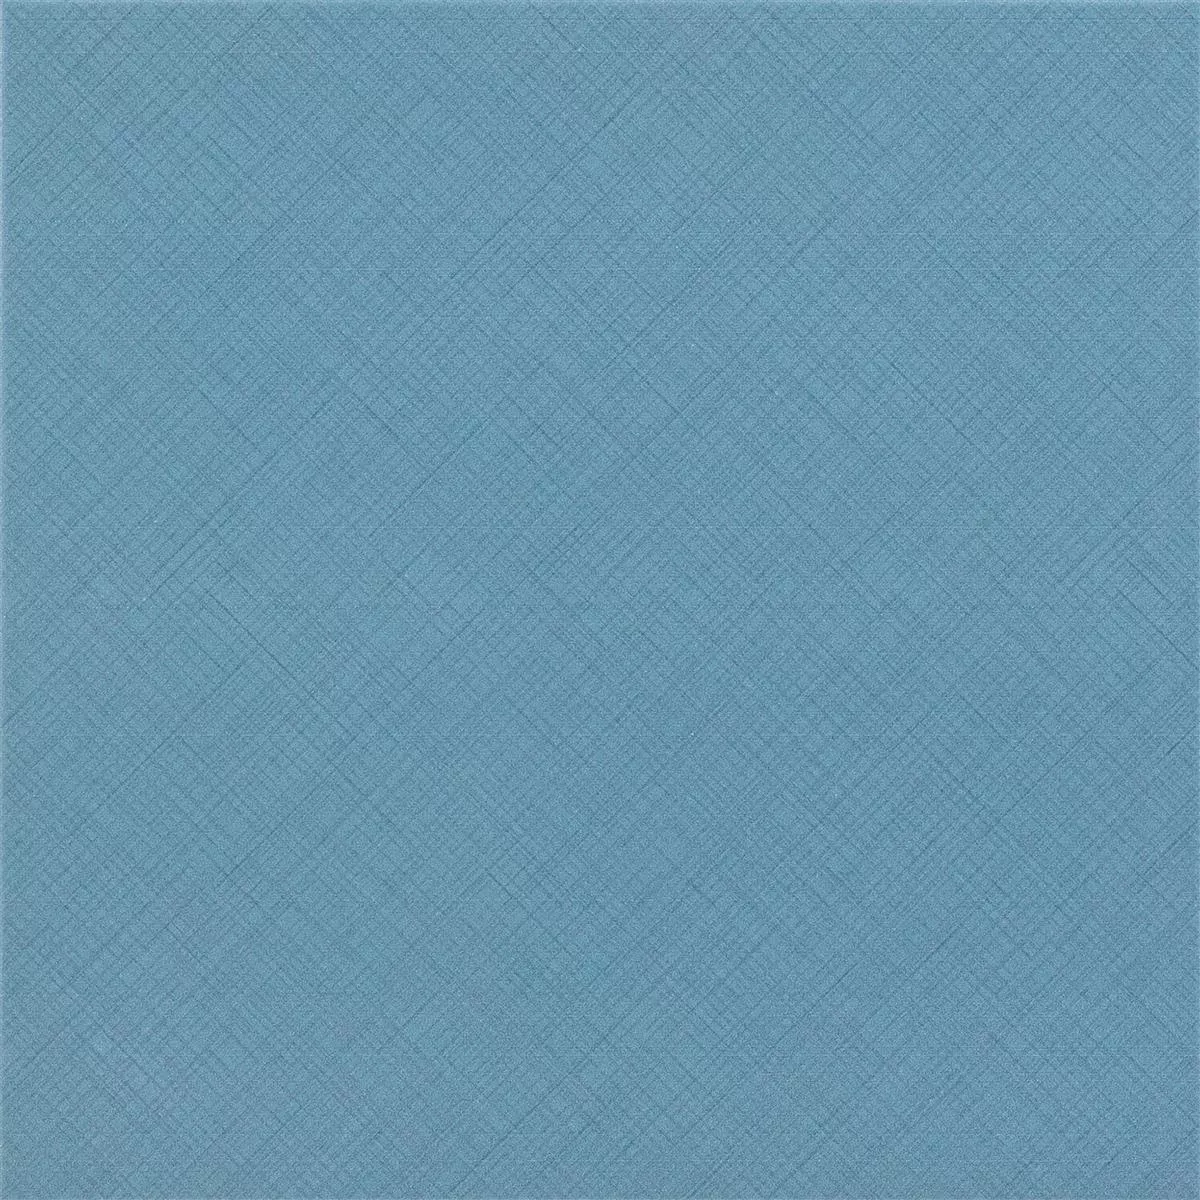 Vzorek Podlahové Dlaždice Cementový Vzhled Wildflower Modrá Základní Dlaždice 18,5x18,5cm